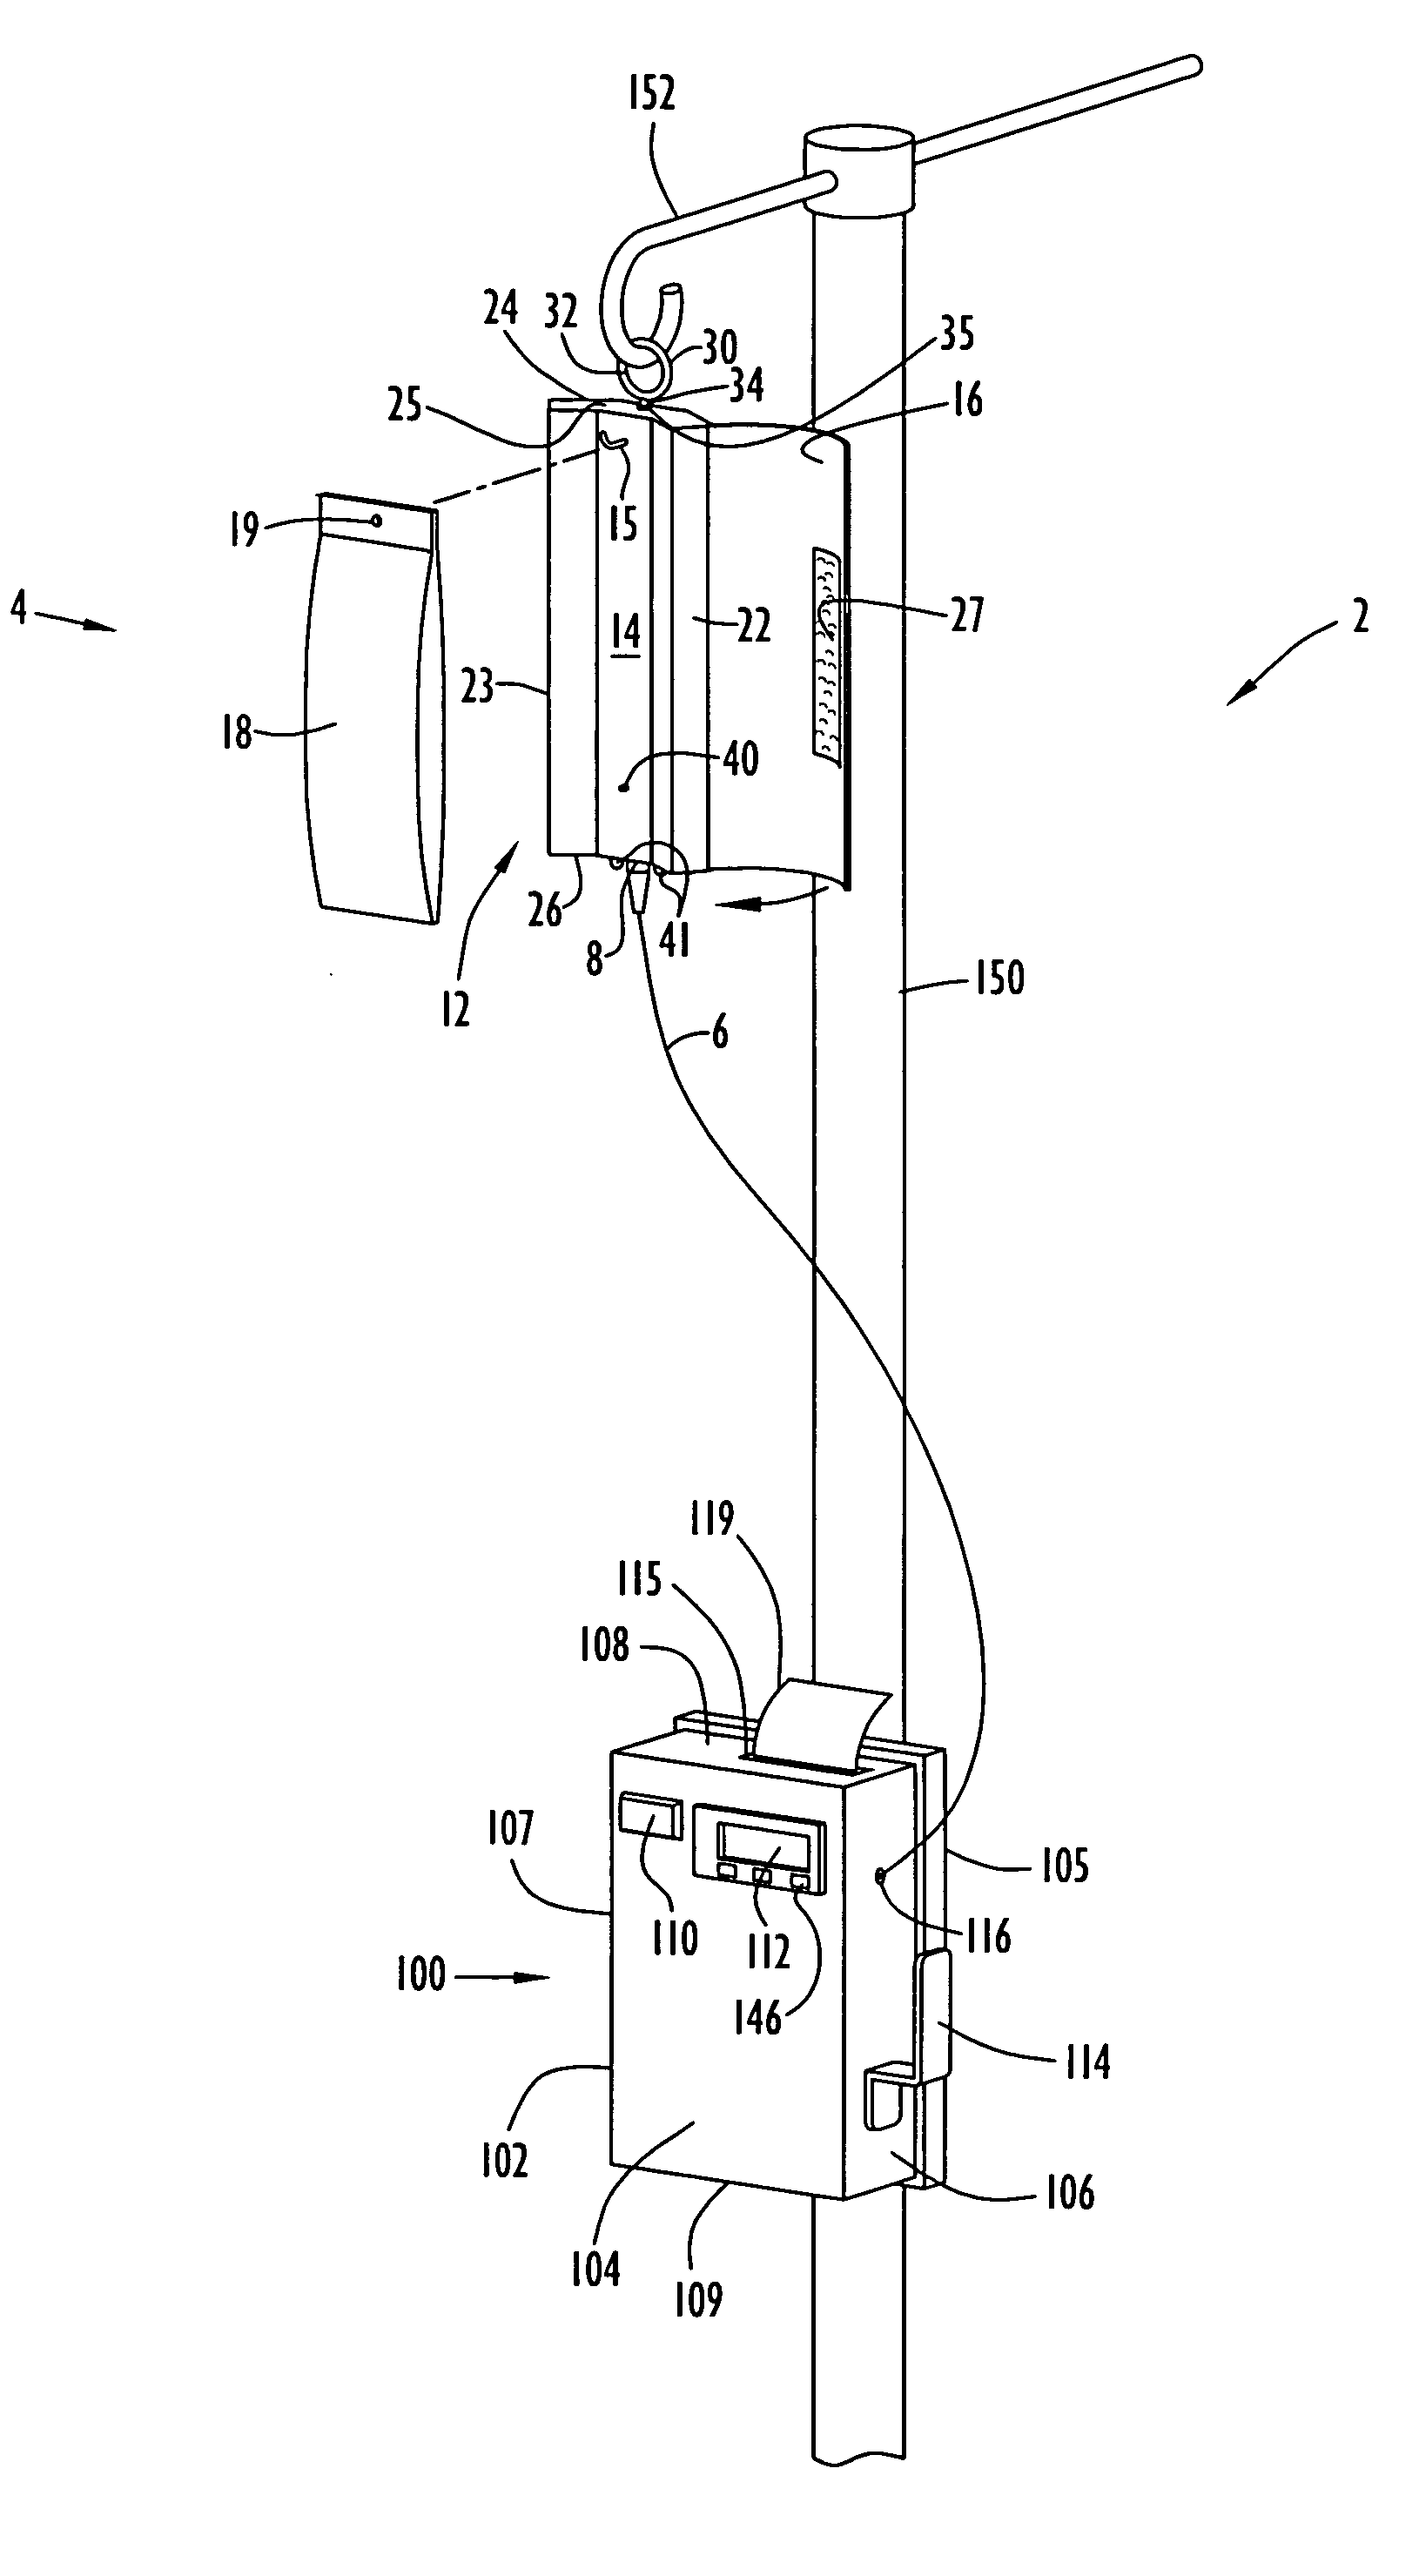 Method and apparatus for controlling temperature of infused liquids